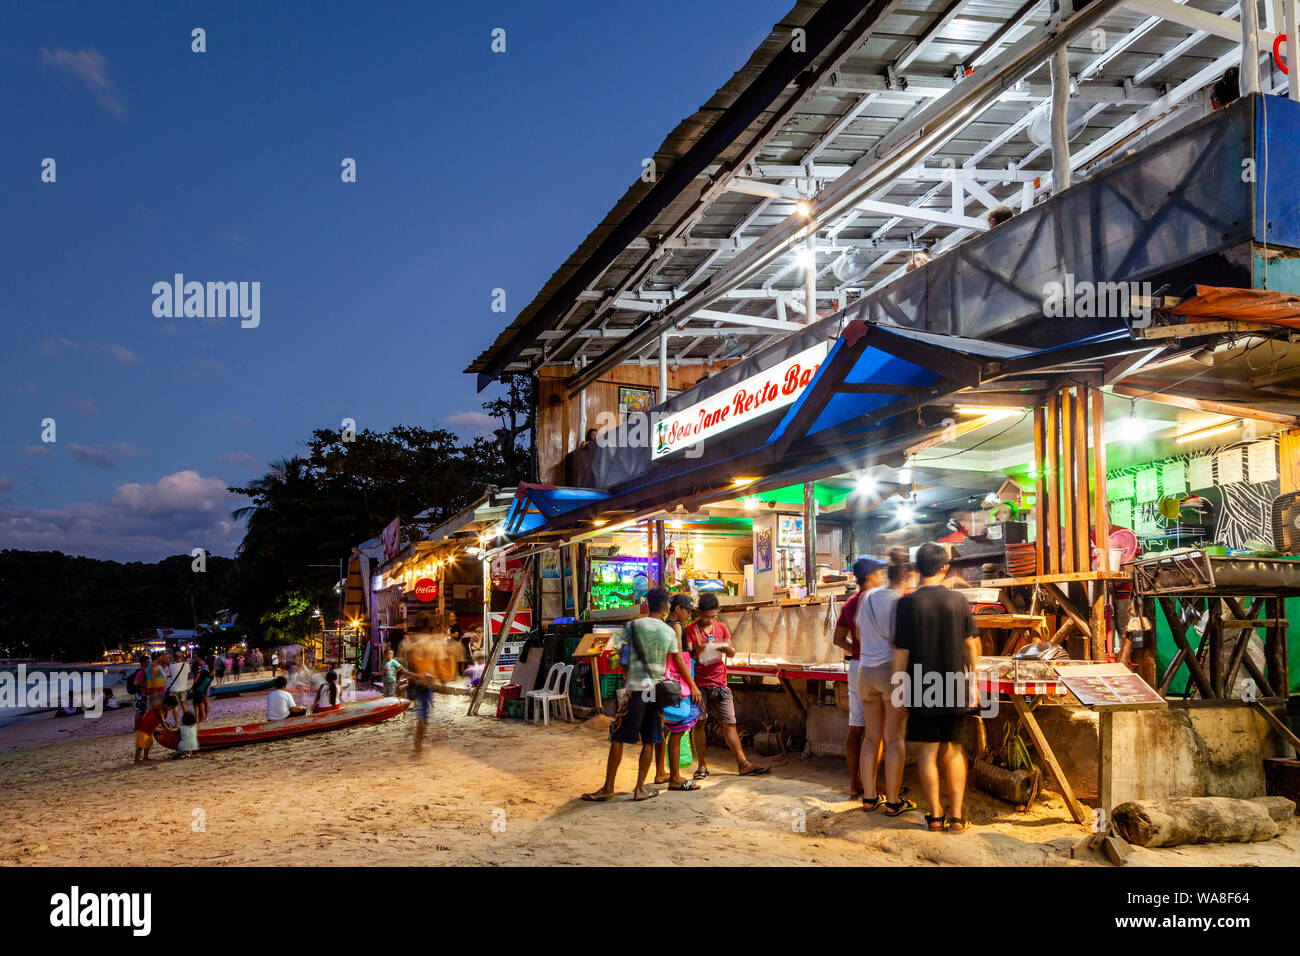 The Sea Jane Resto Bar, Beach Front Restaurant, El Nido, Palawan Island, The Philippines Stock Photo